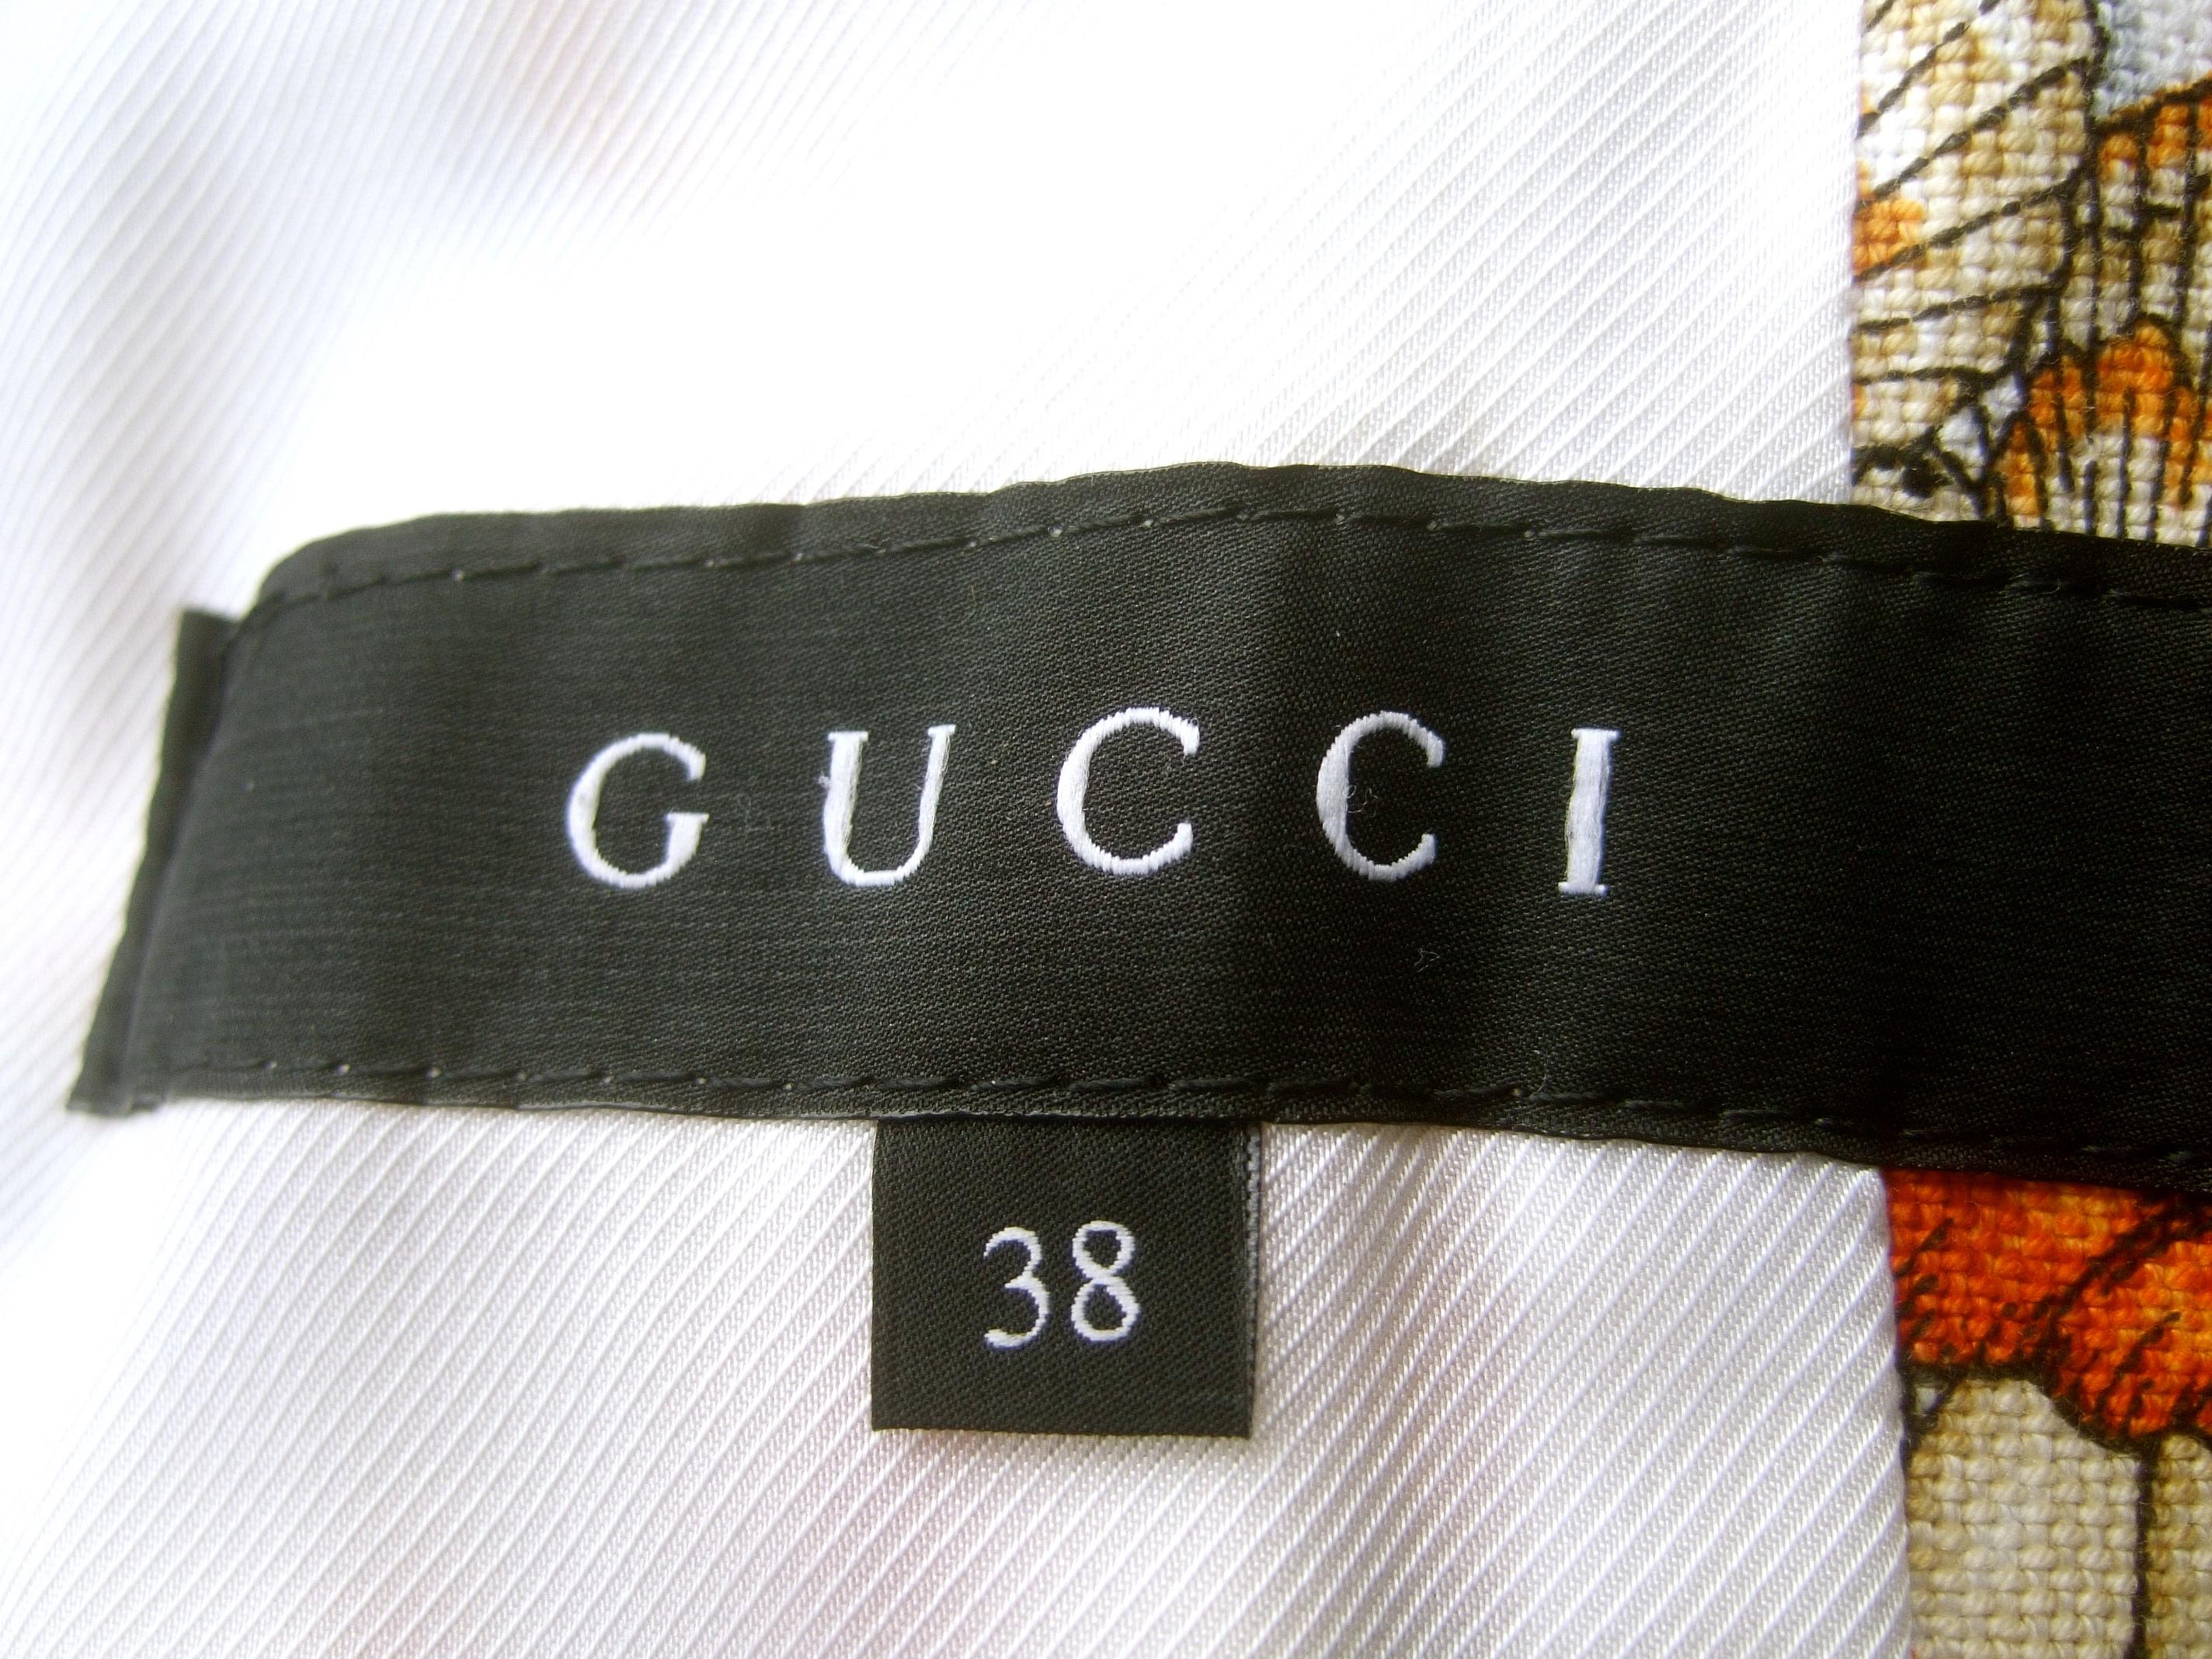 Gucci Rare Cotton & Leather Trim Sea Life Jacket Size 38 c 1990s For Sale 12